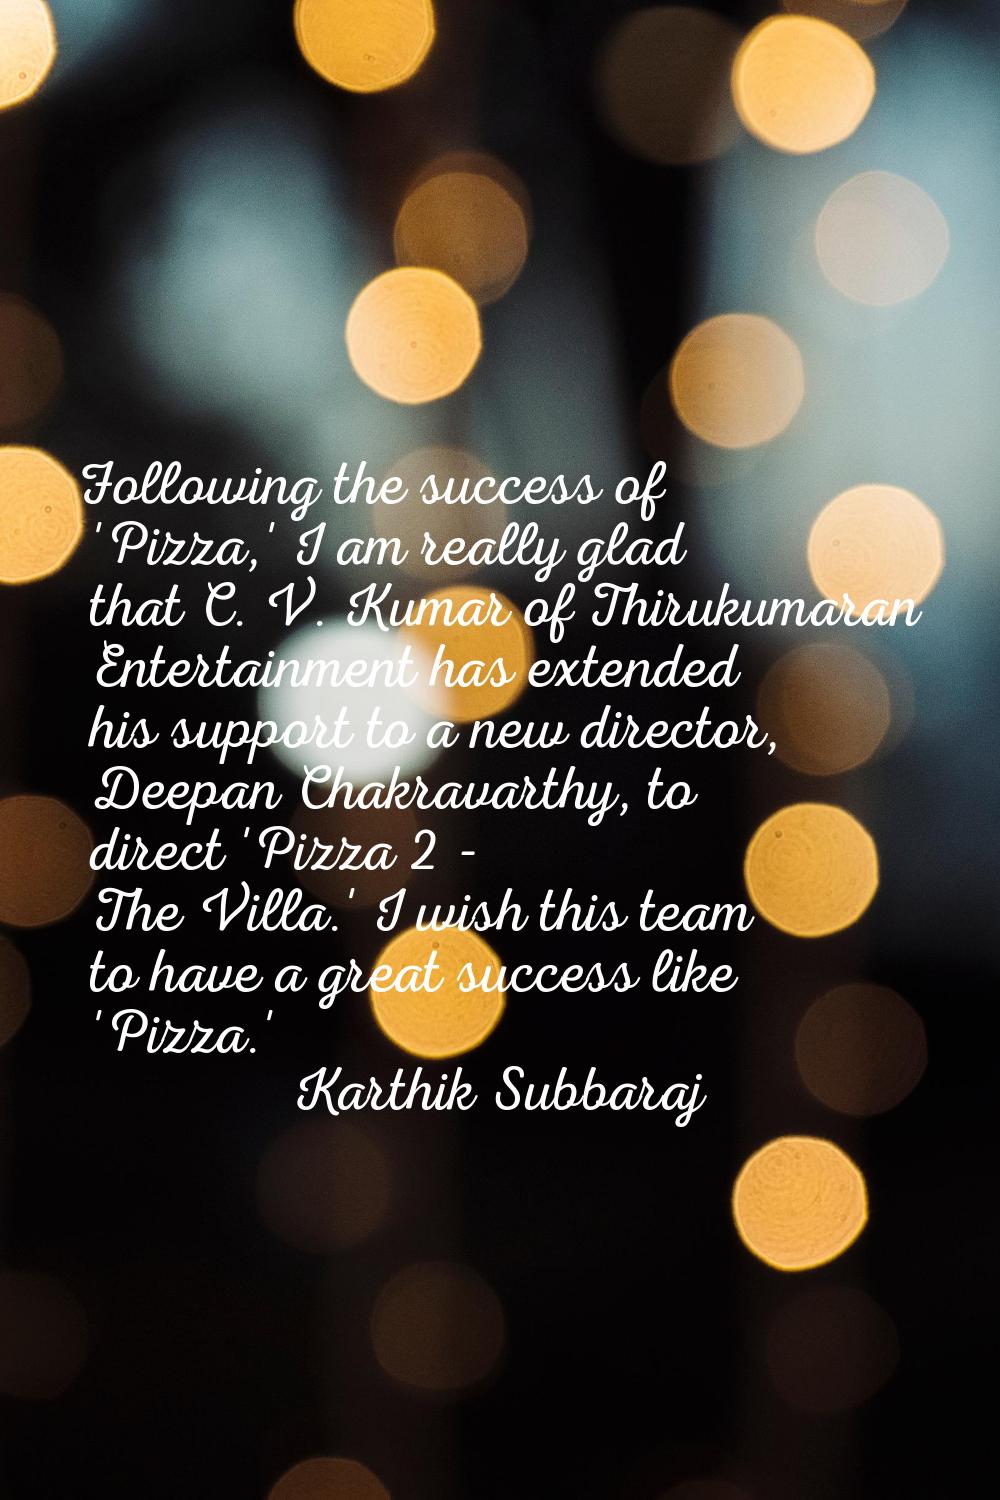 Following the success of 'Pizza,' I am really glad that C. V. Kumar of Thirukumaran Entertainment h